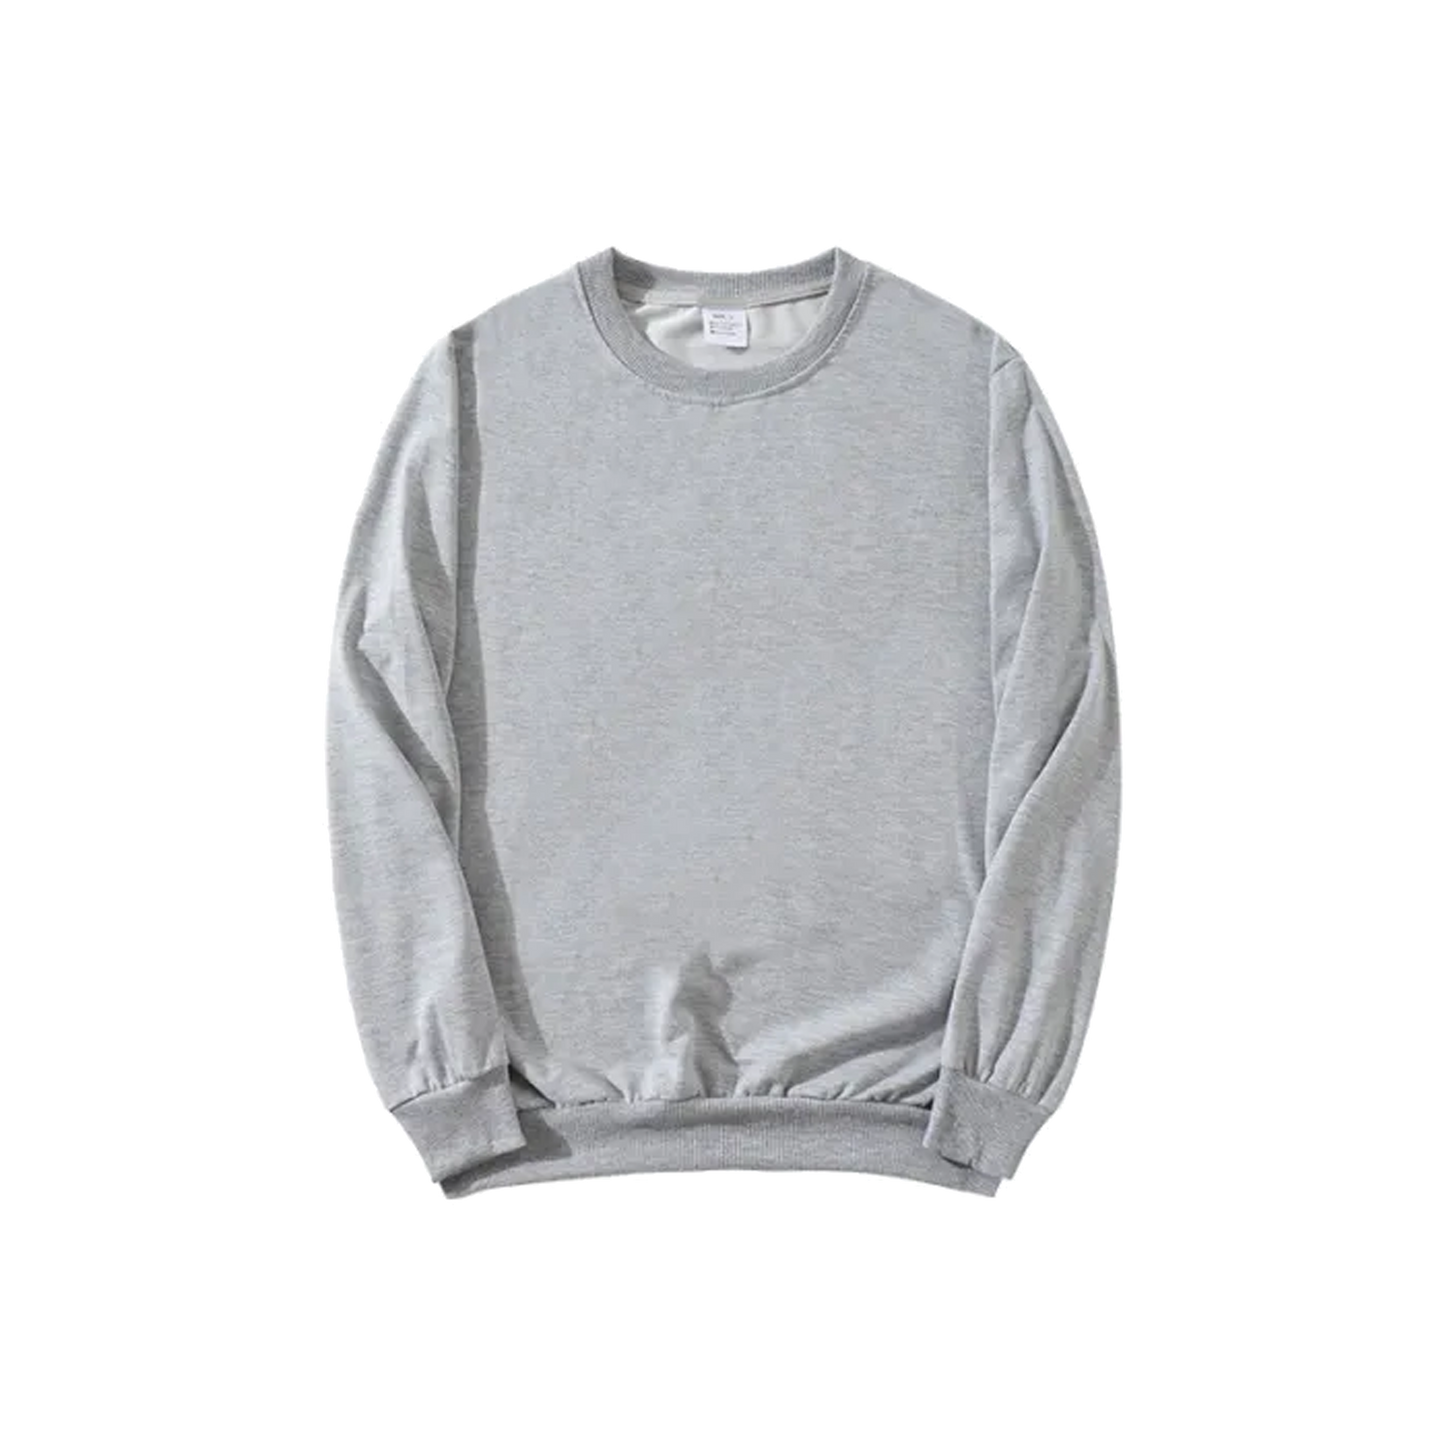 Gray 95% polyester sublimation sweatshirt